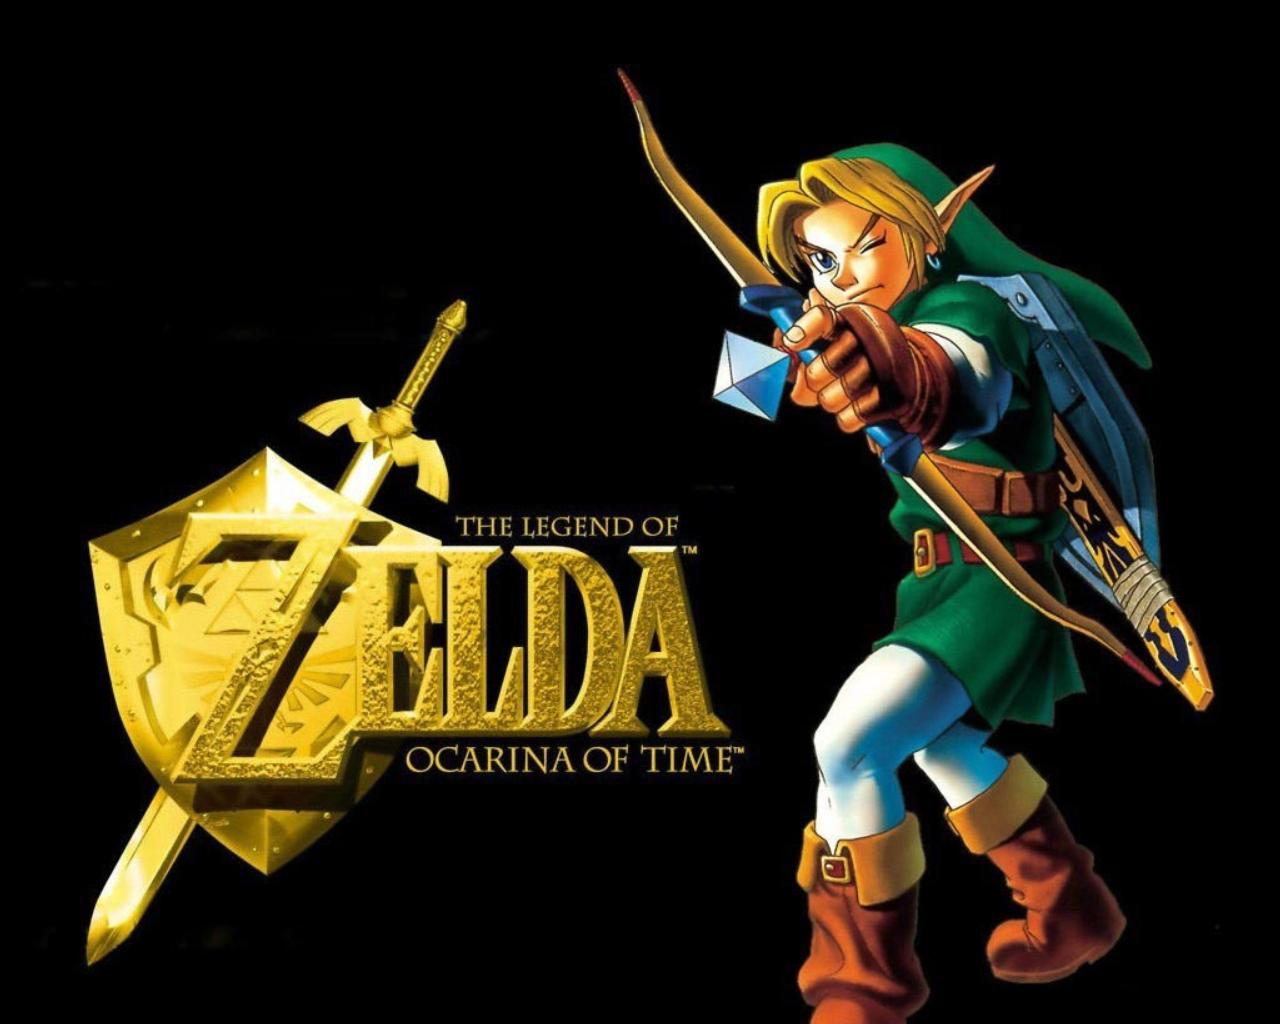 Chain Of Link & Zelda Fan Made Mobile Wallpaper By TheJohnSu - Kawaii Hoshi